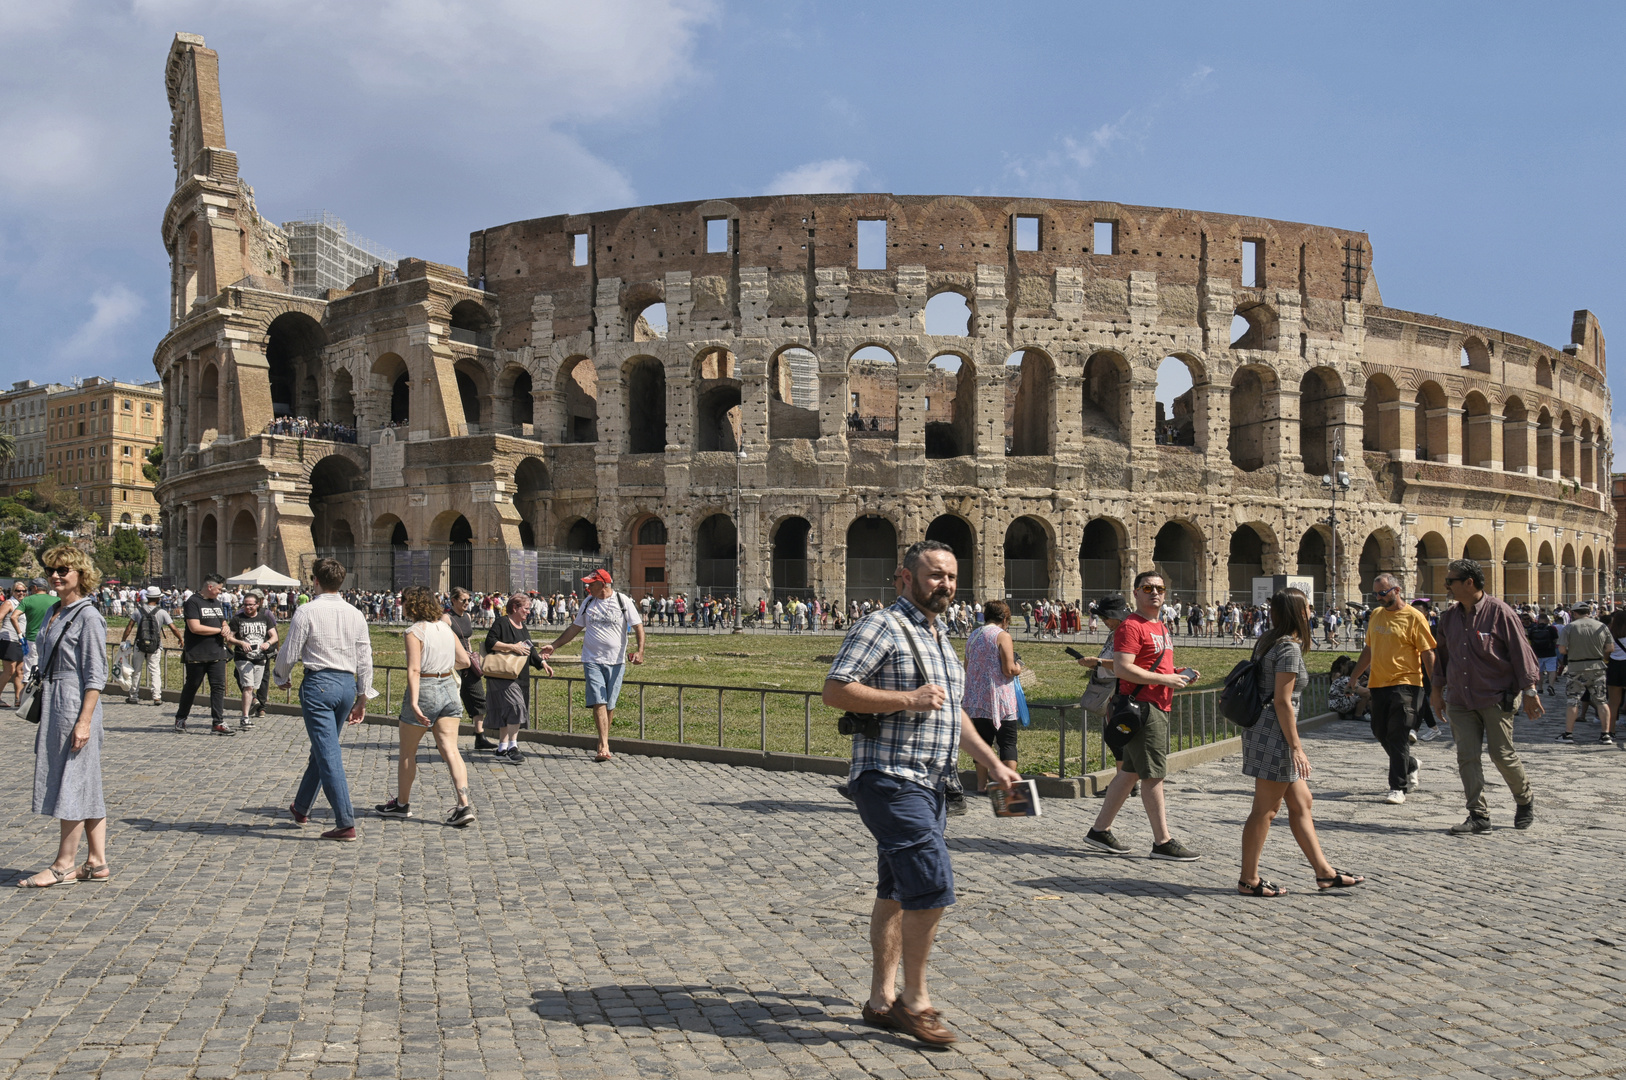 Colosseum Rom - Antike 